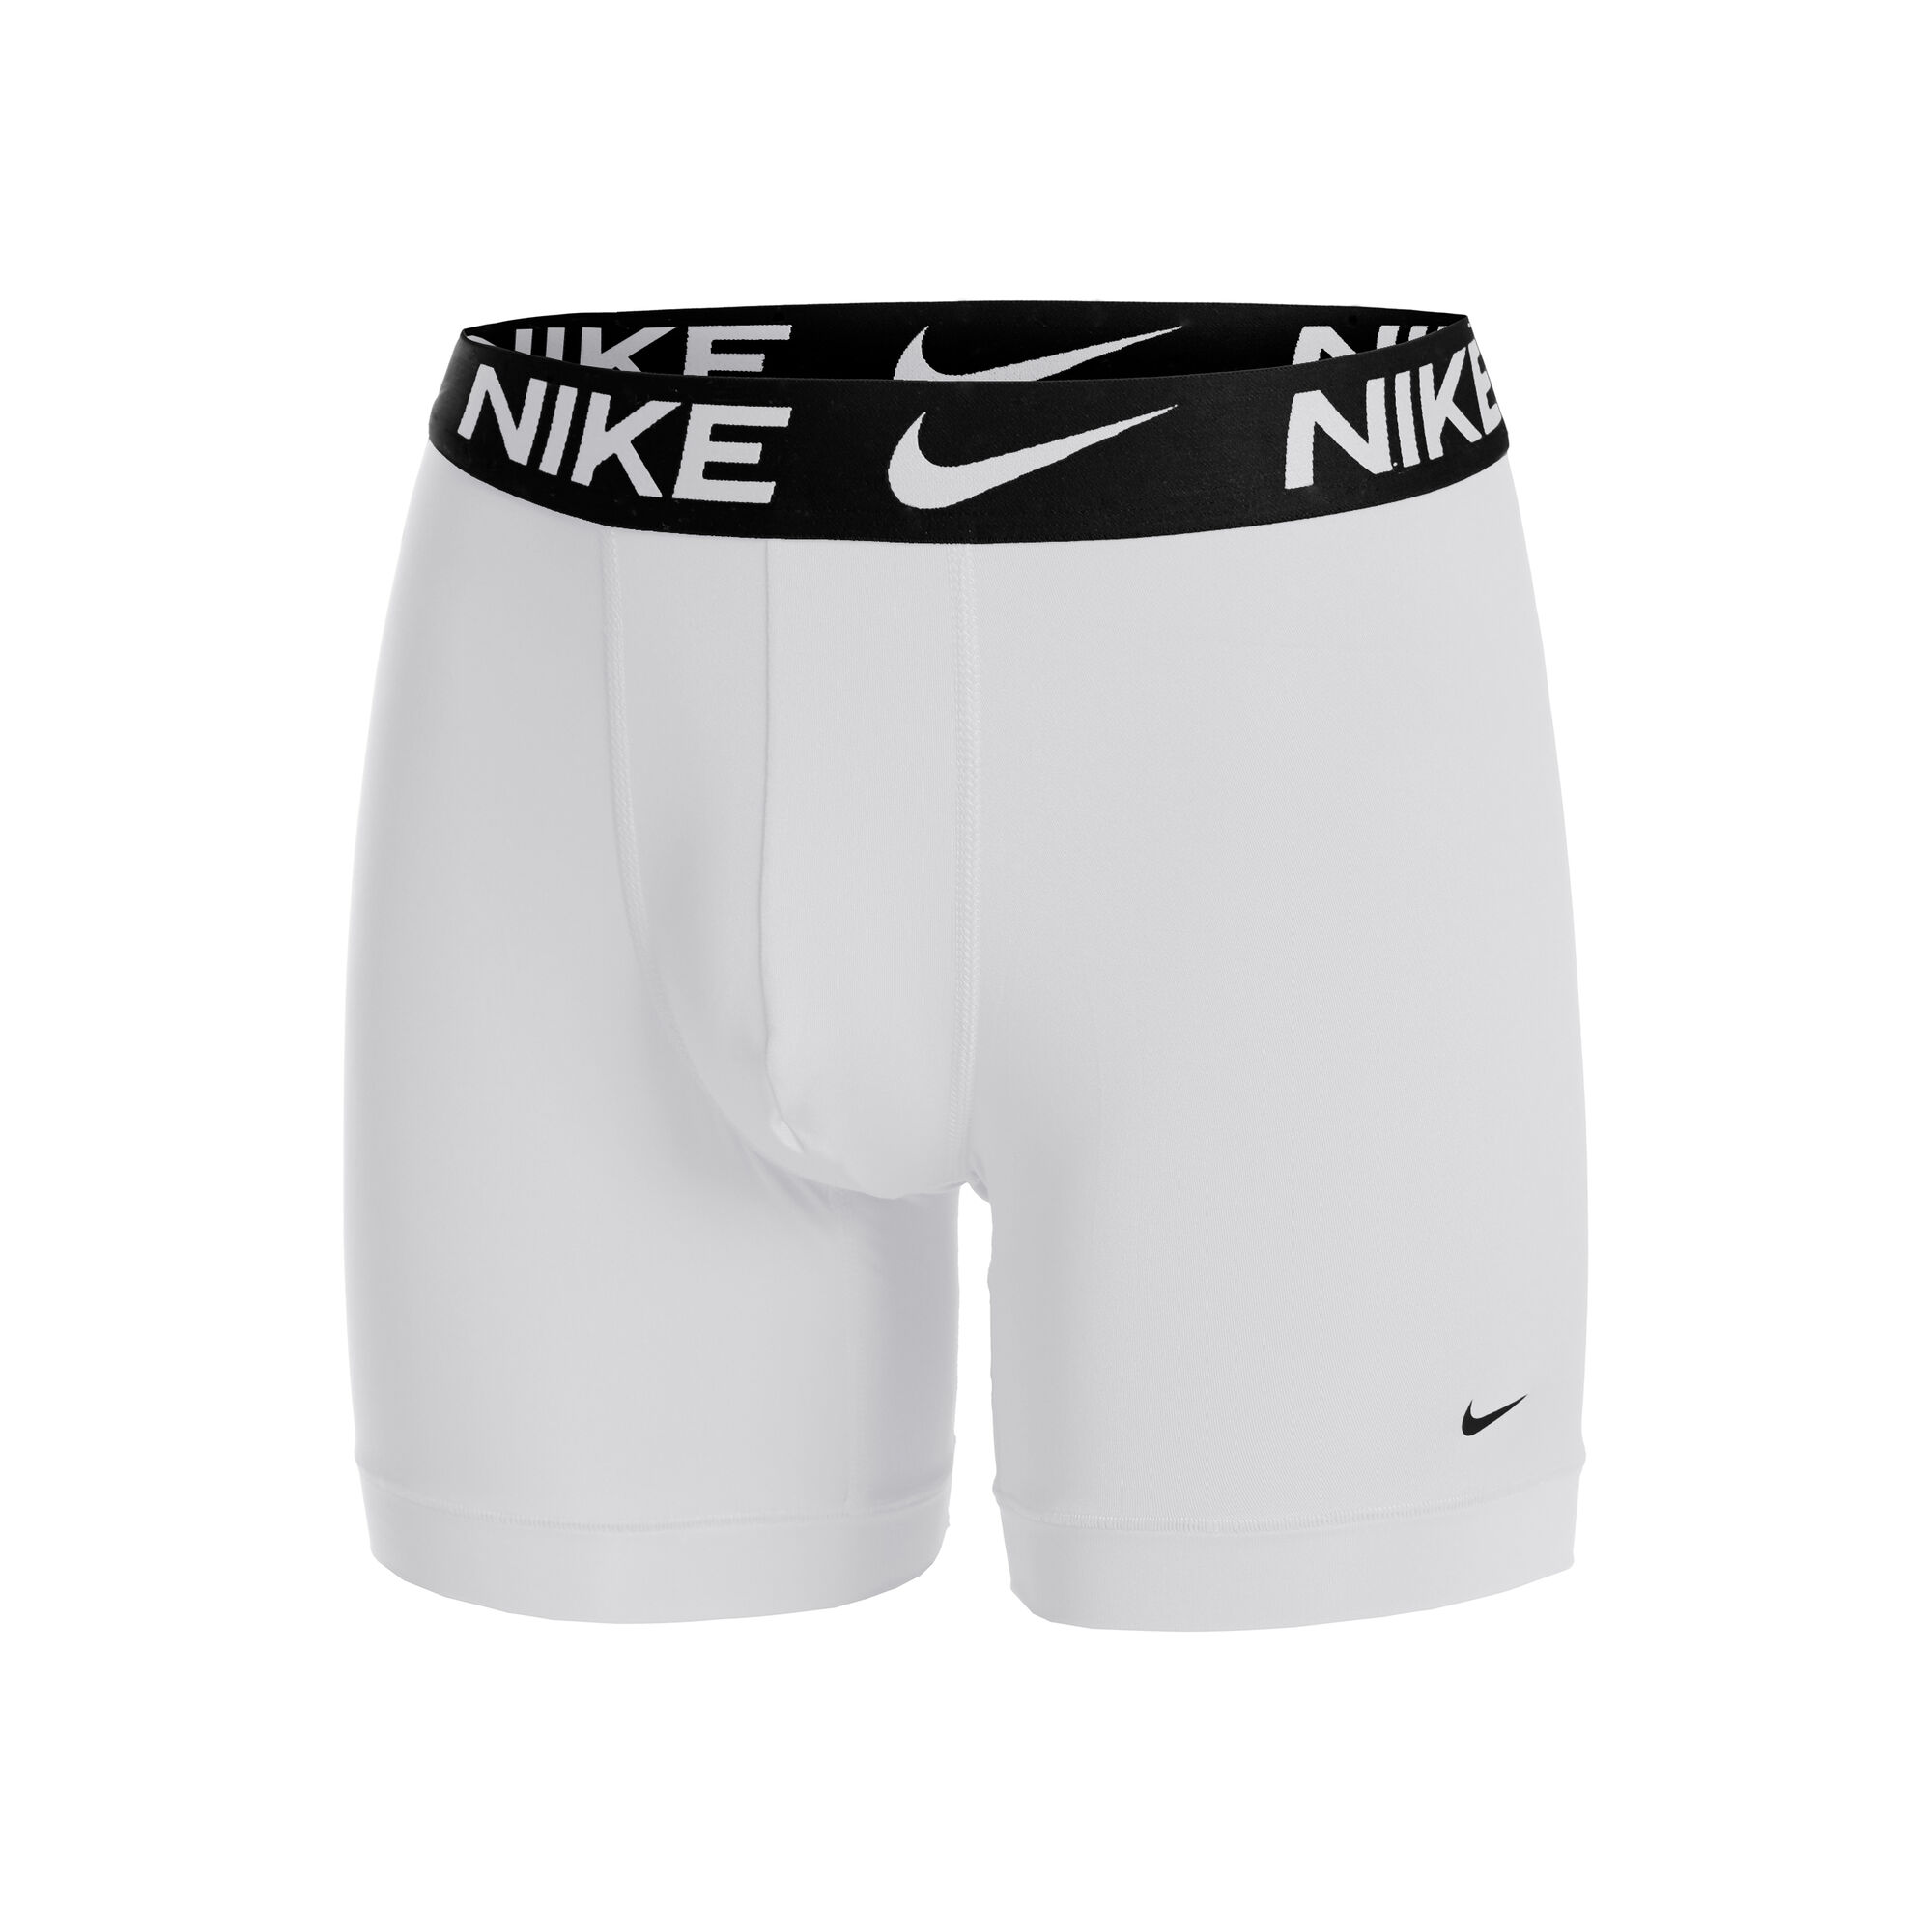 buy Nike Essen Micro online | Tennis-Point